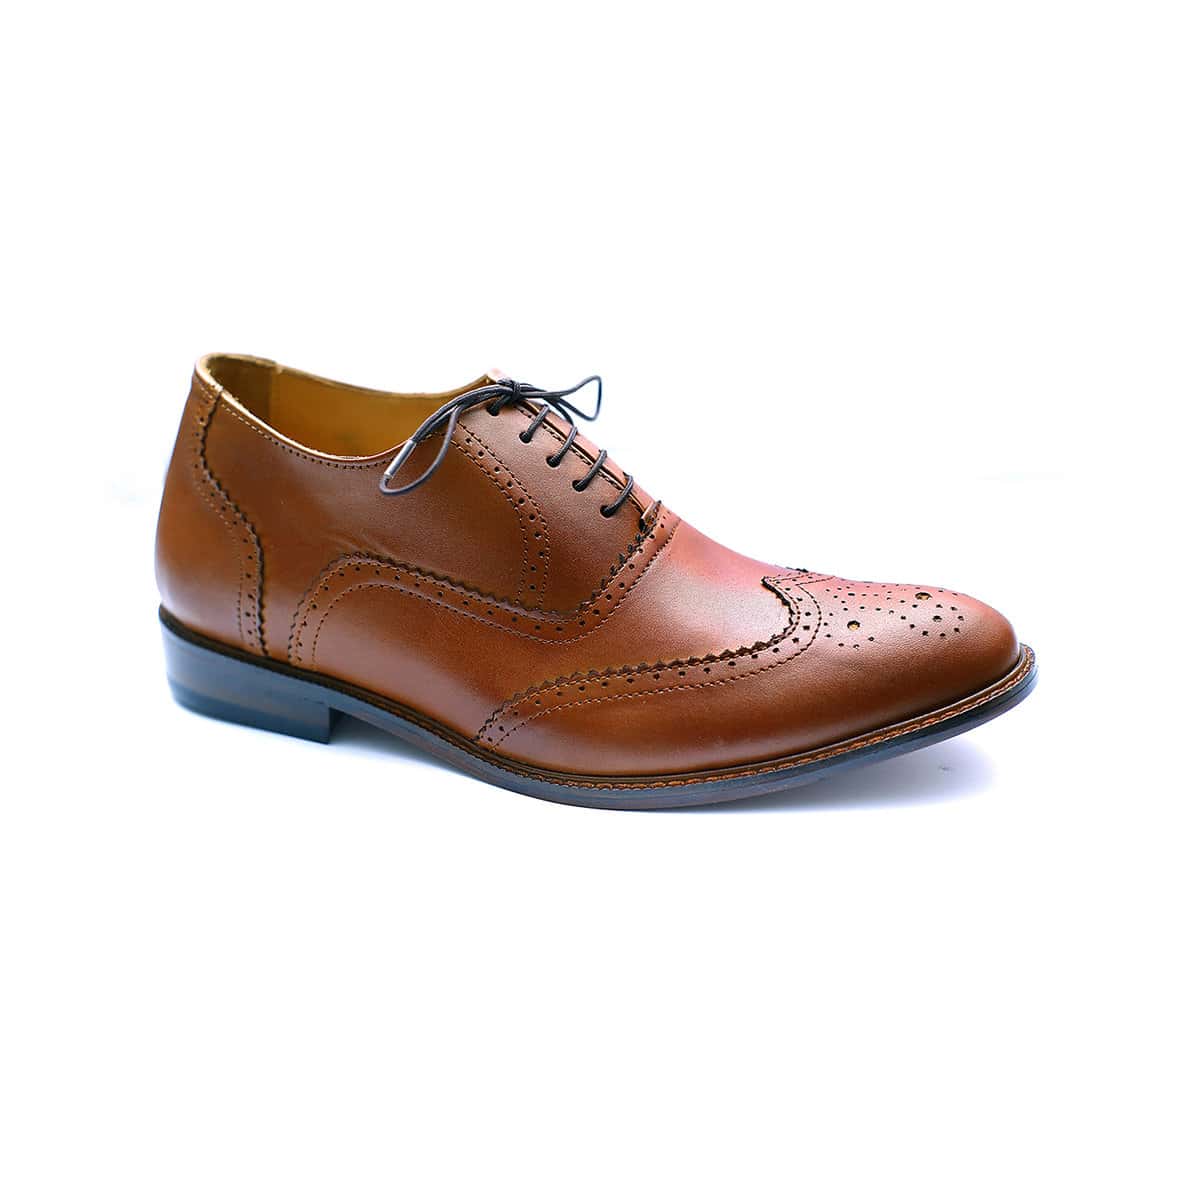 Tls83x – Top Grain Leather Brogue Shoes – 6.5 Cm Taller